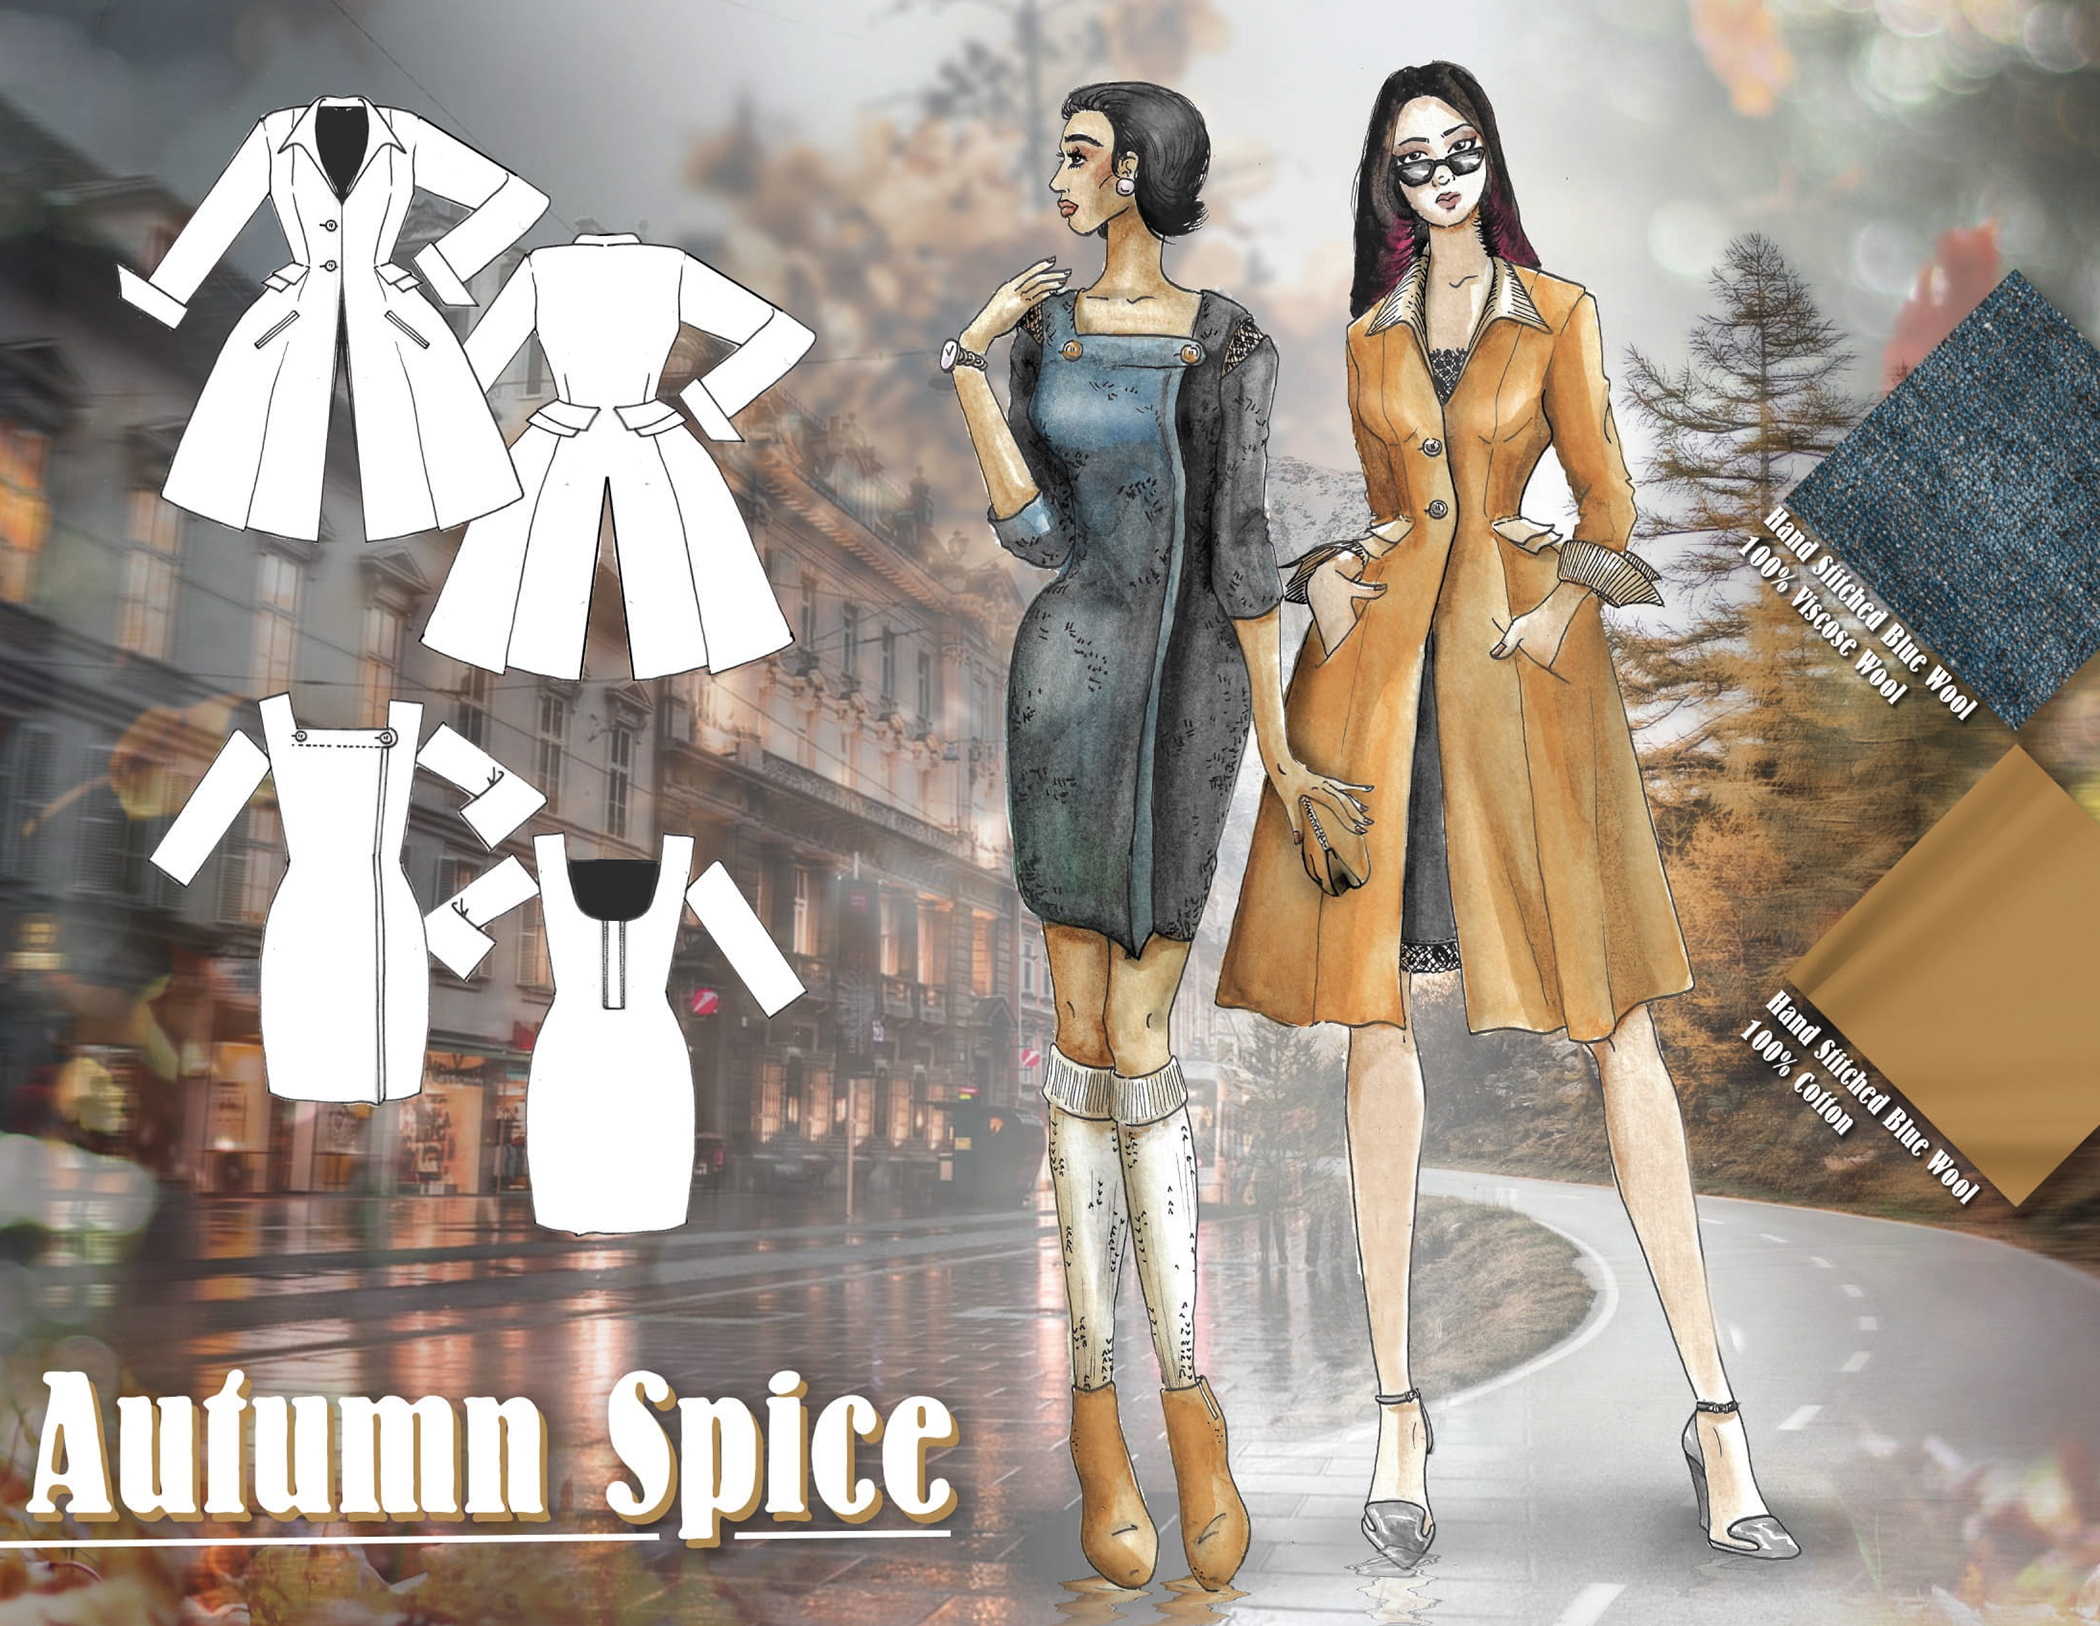 "Autumn Spice" fashion illustration by Samantha Kragel